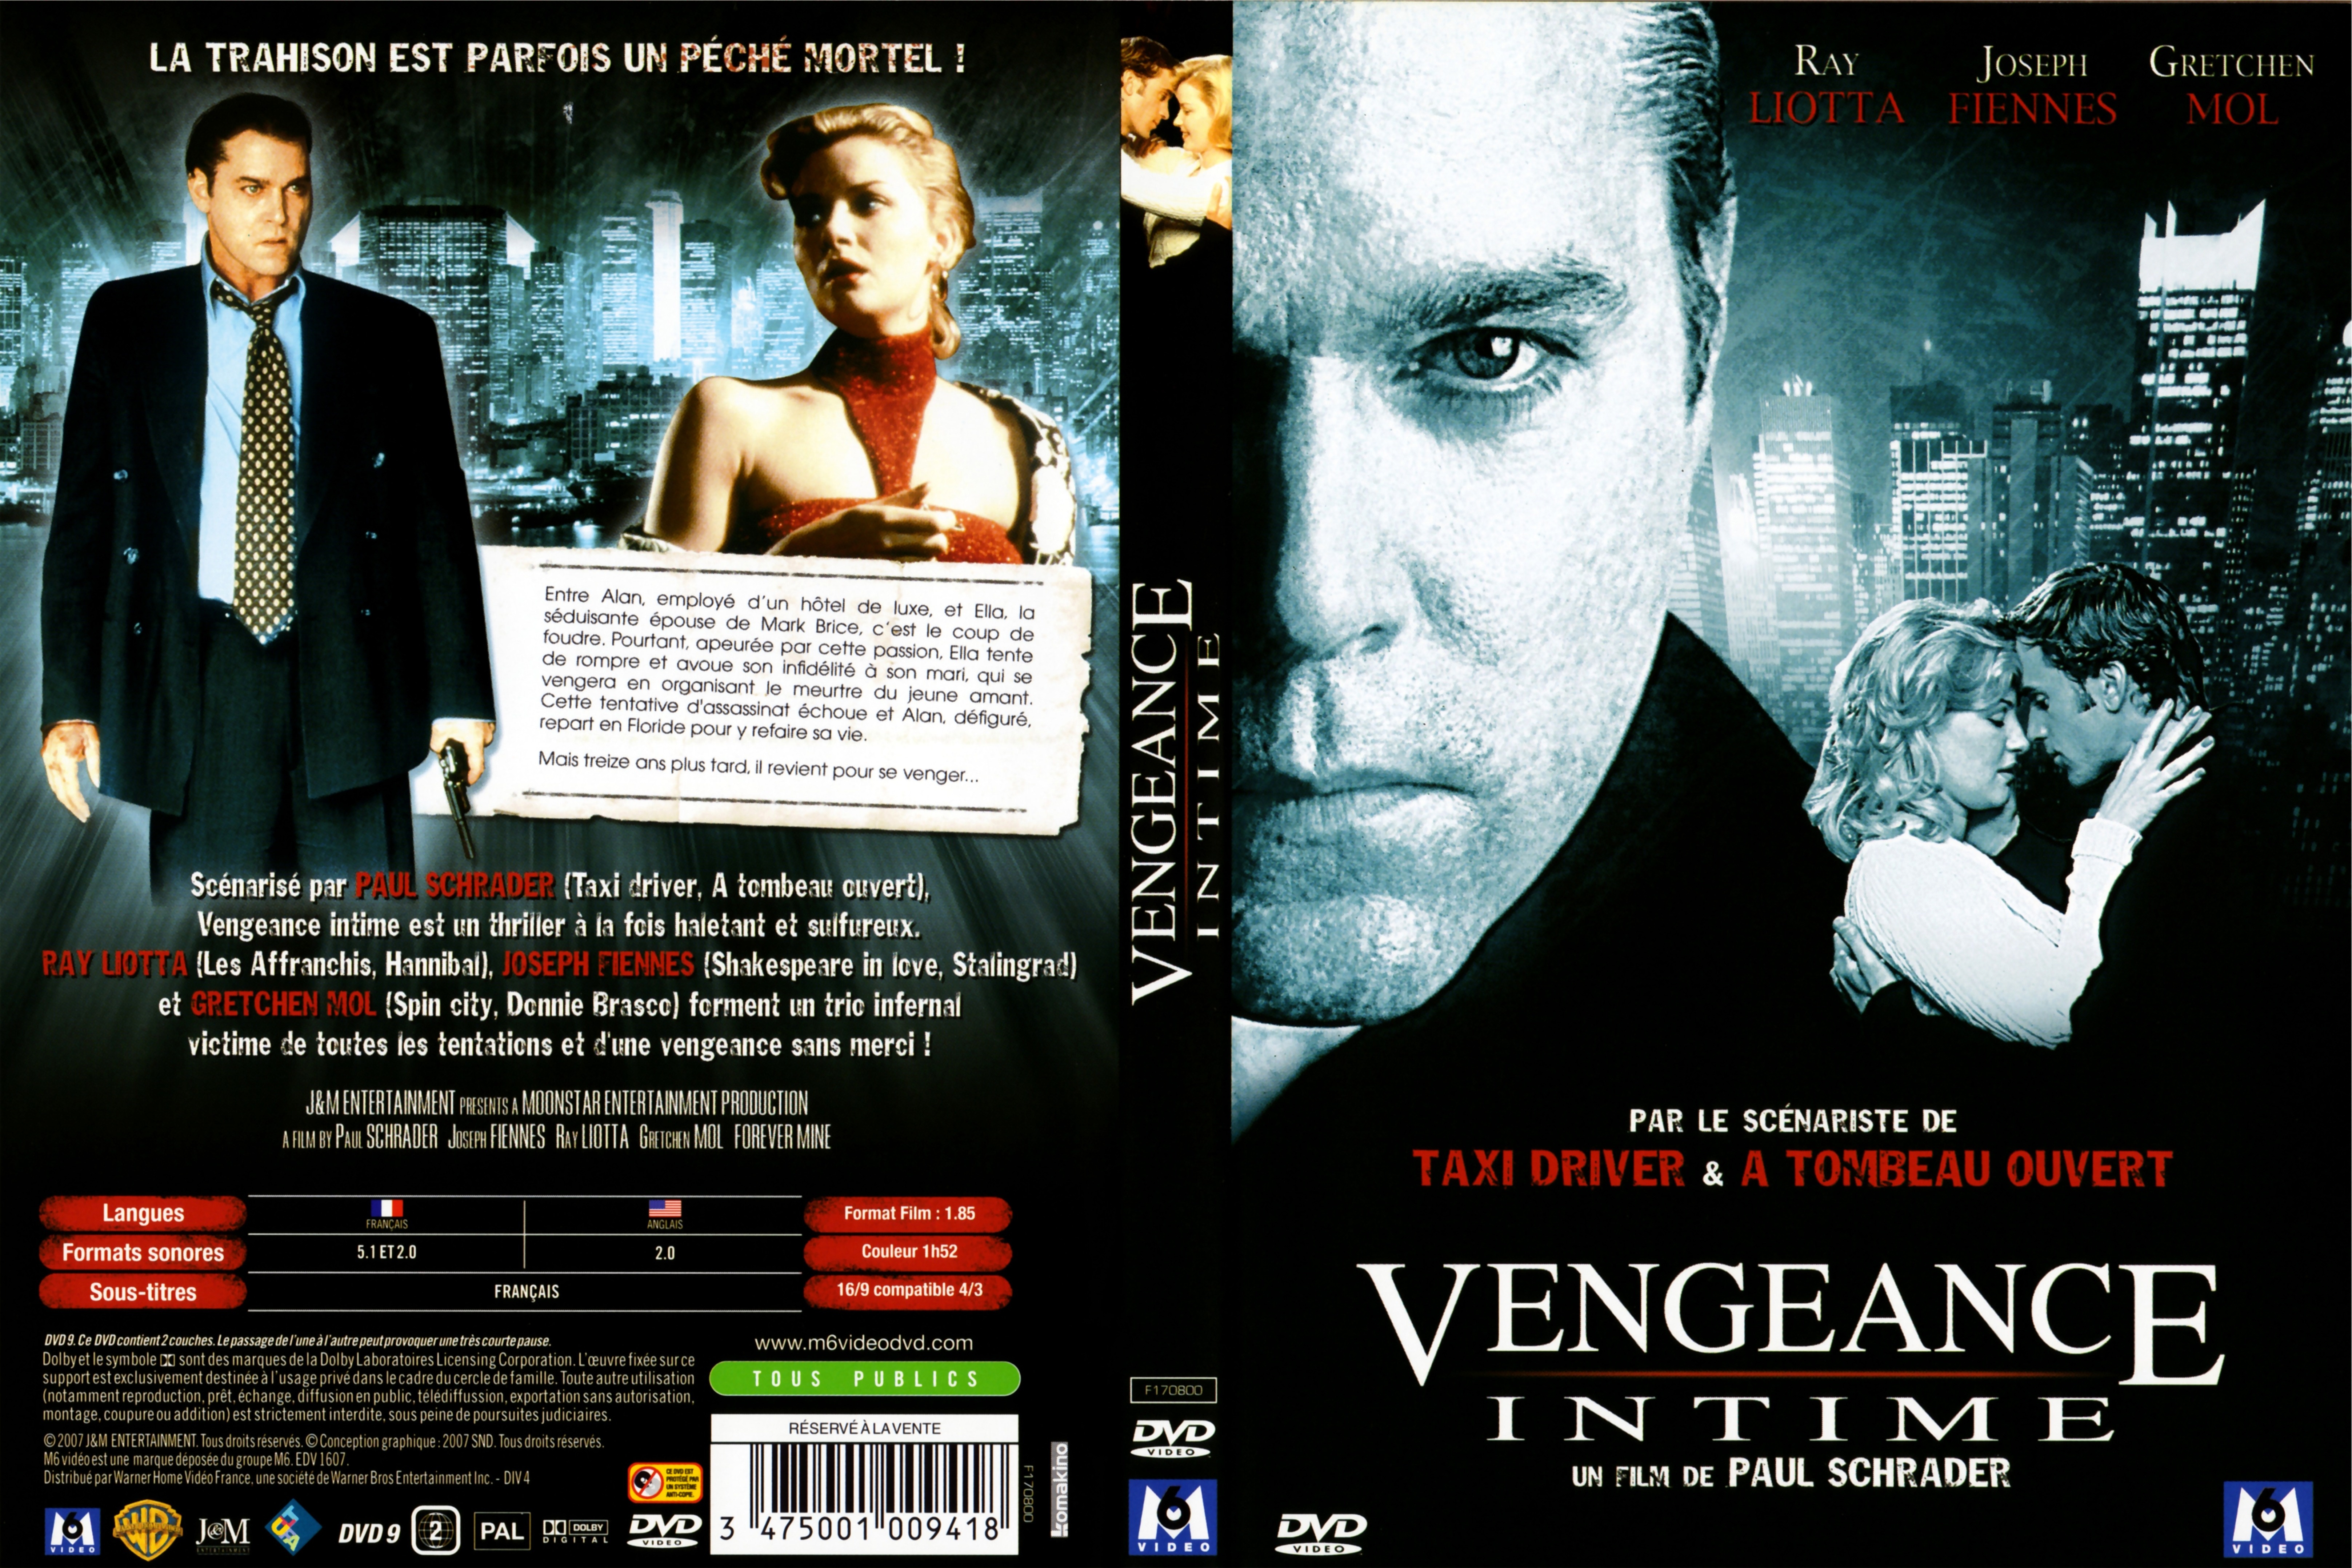 Jaquette DVD Vengeance intime